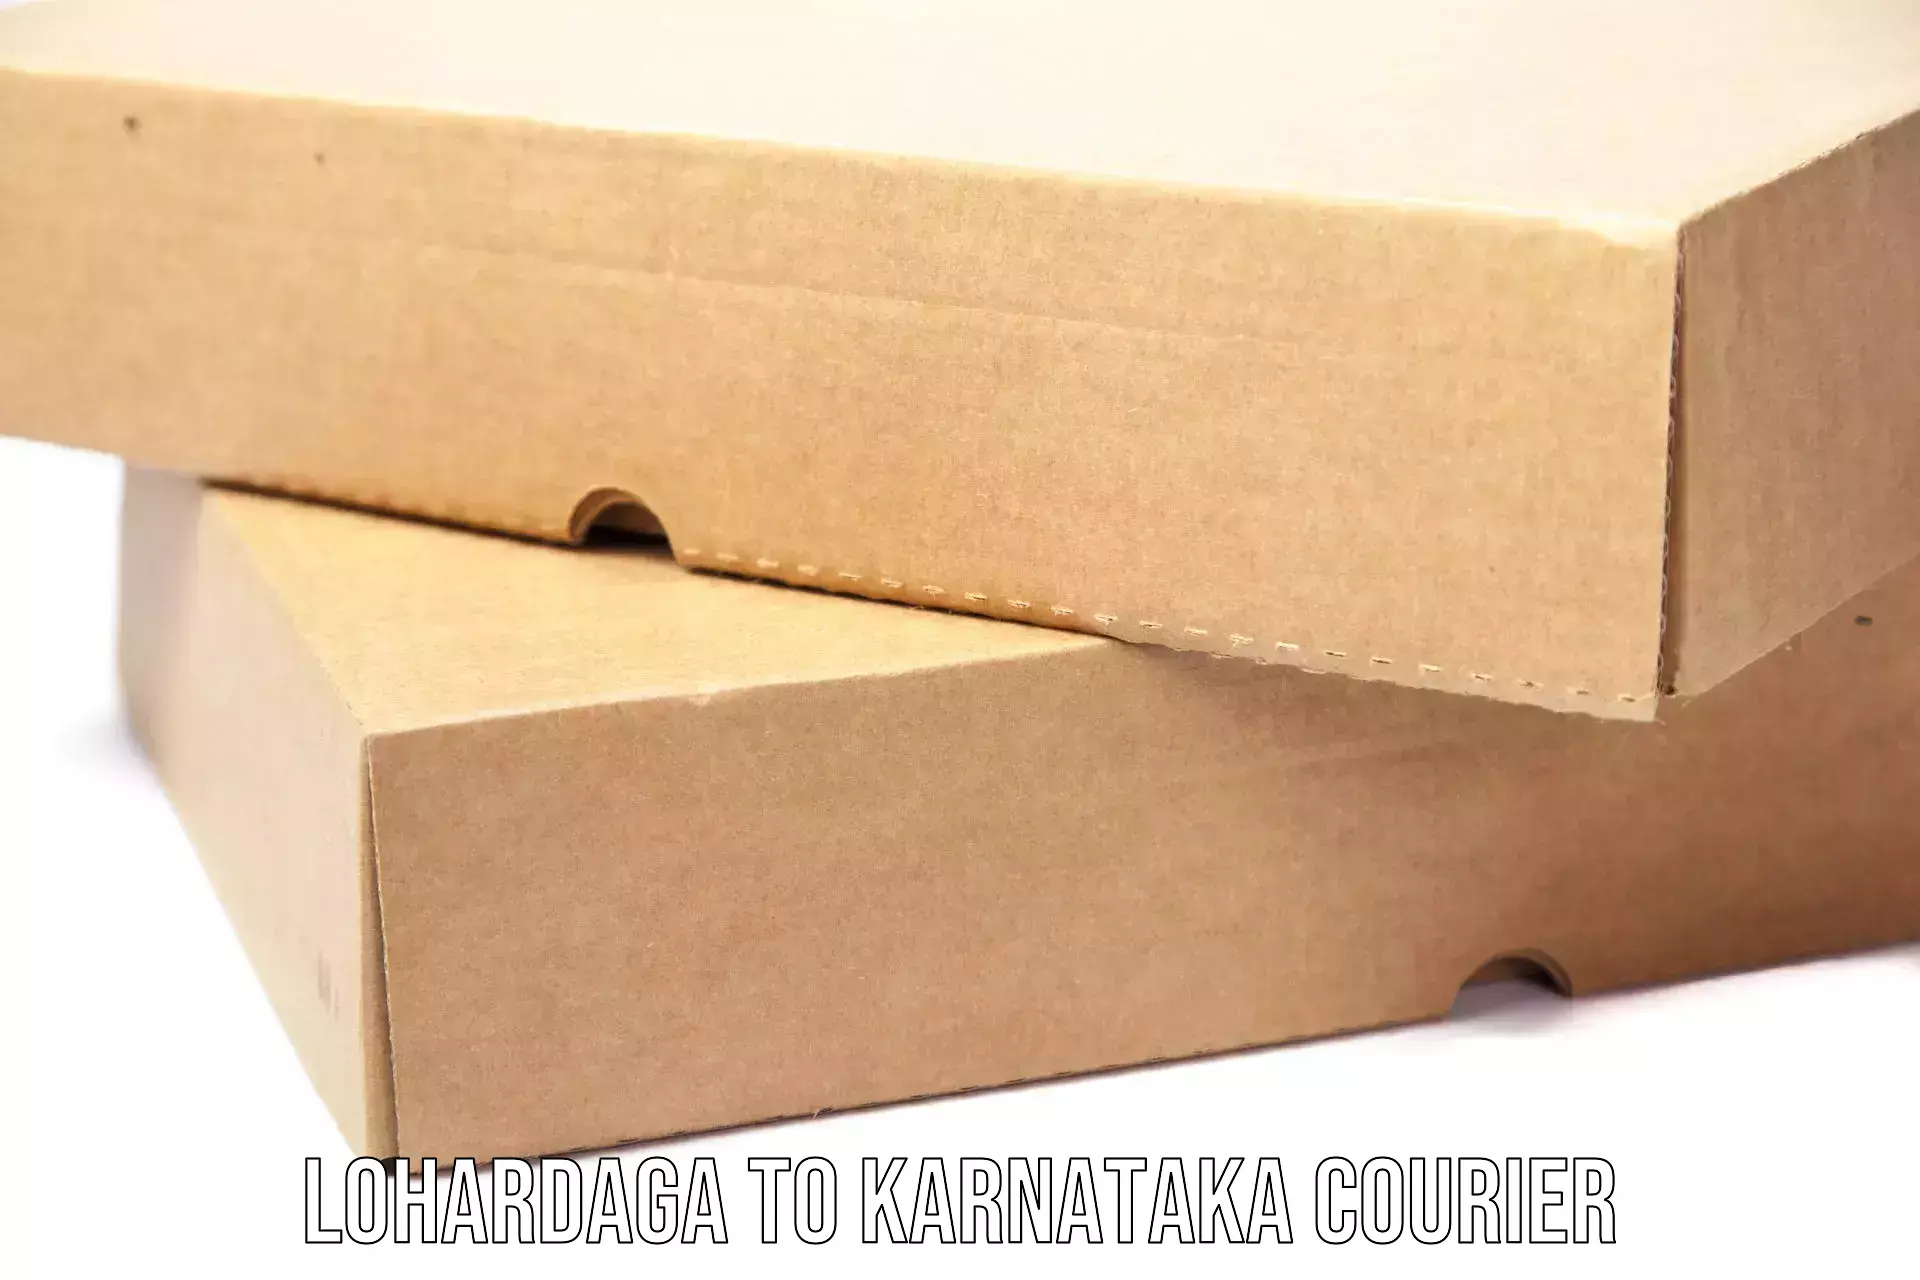 Cost-effective freight solutions Lohardaga to Karnataka